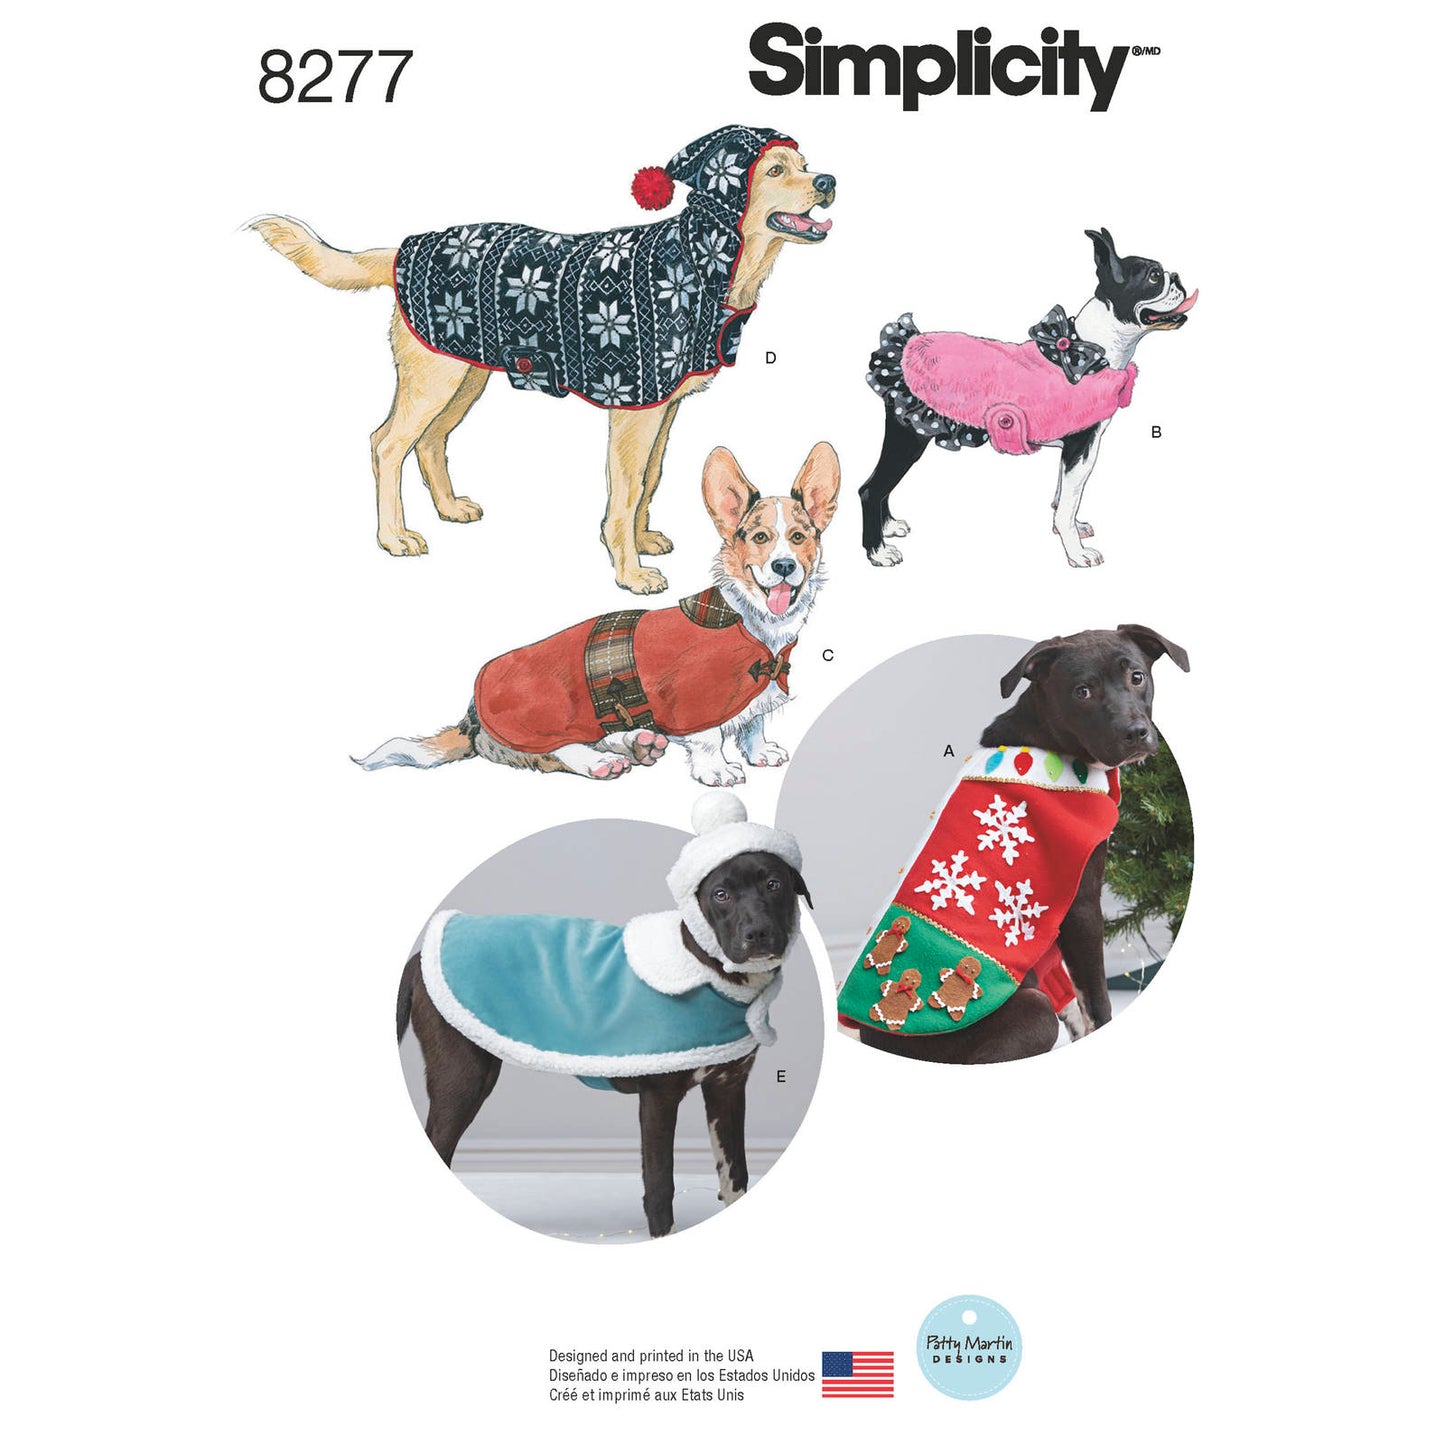 Simplicity - 8277